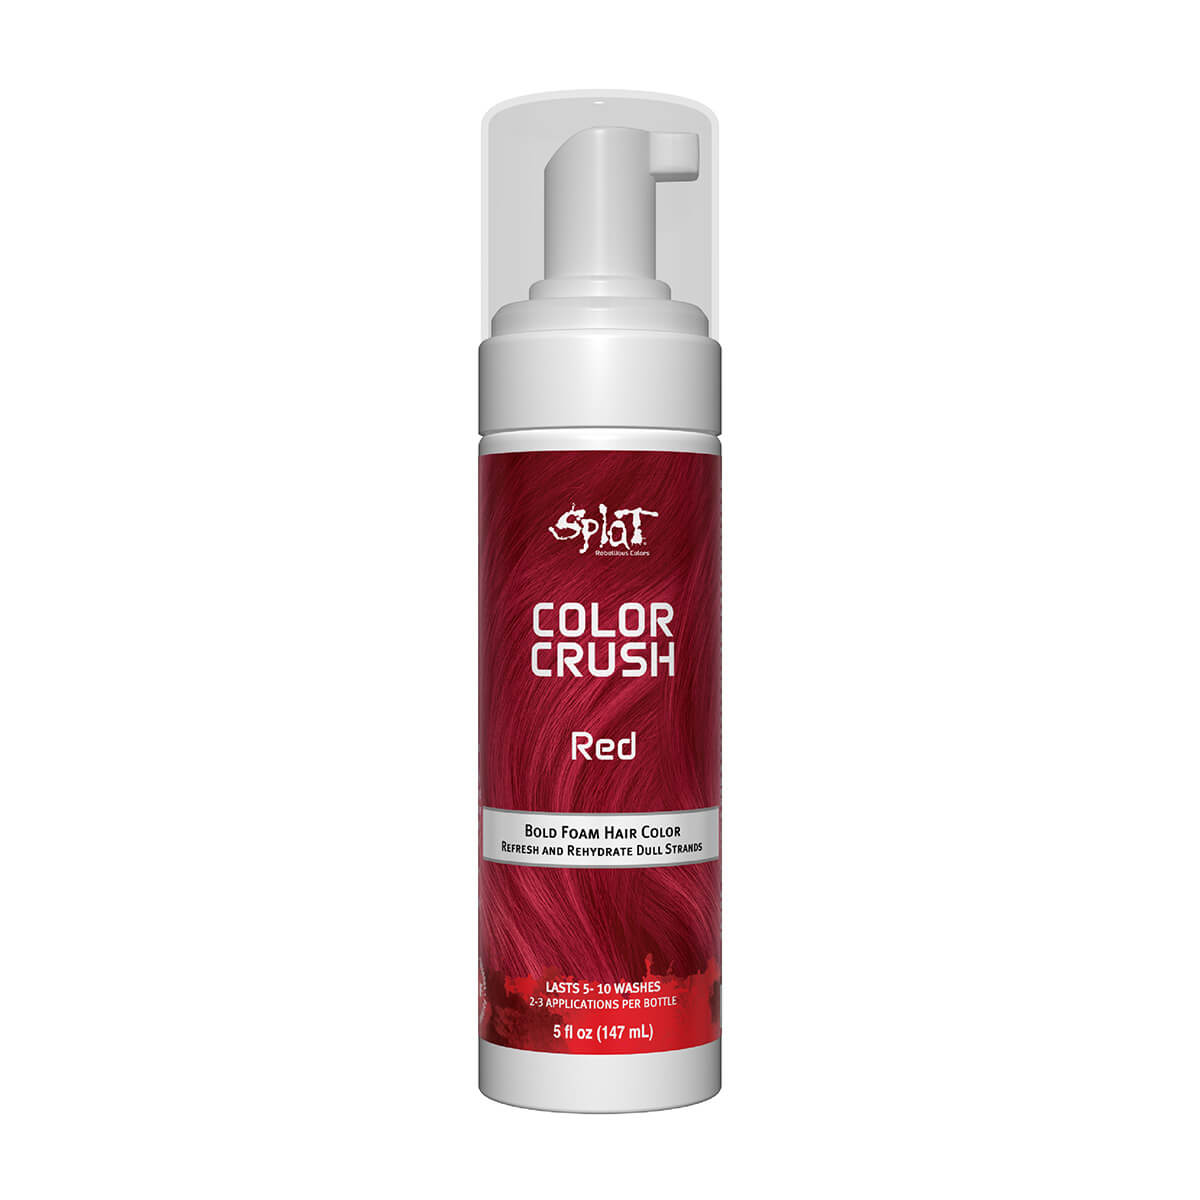 Splat Color Crush - Red